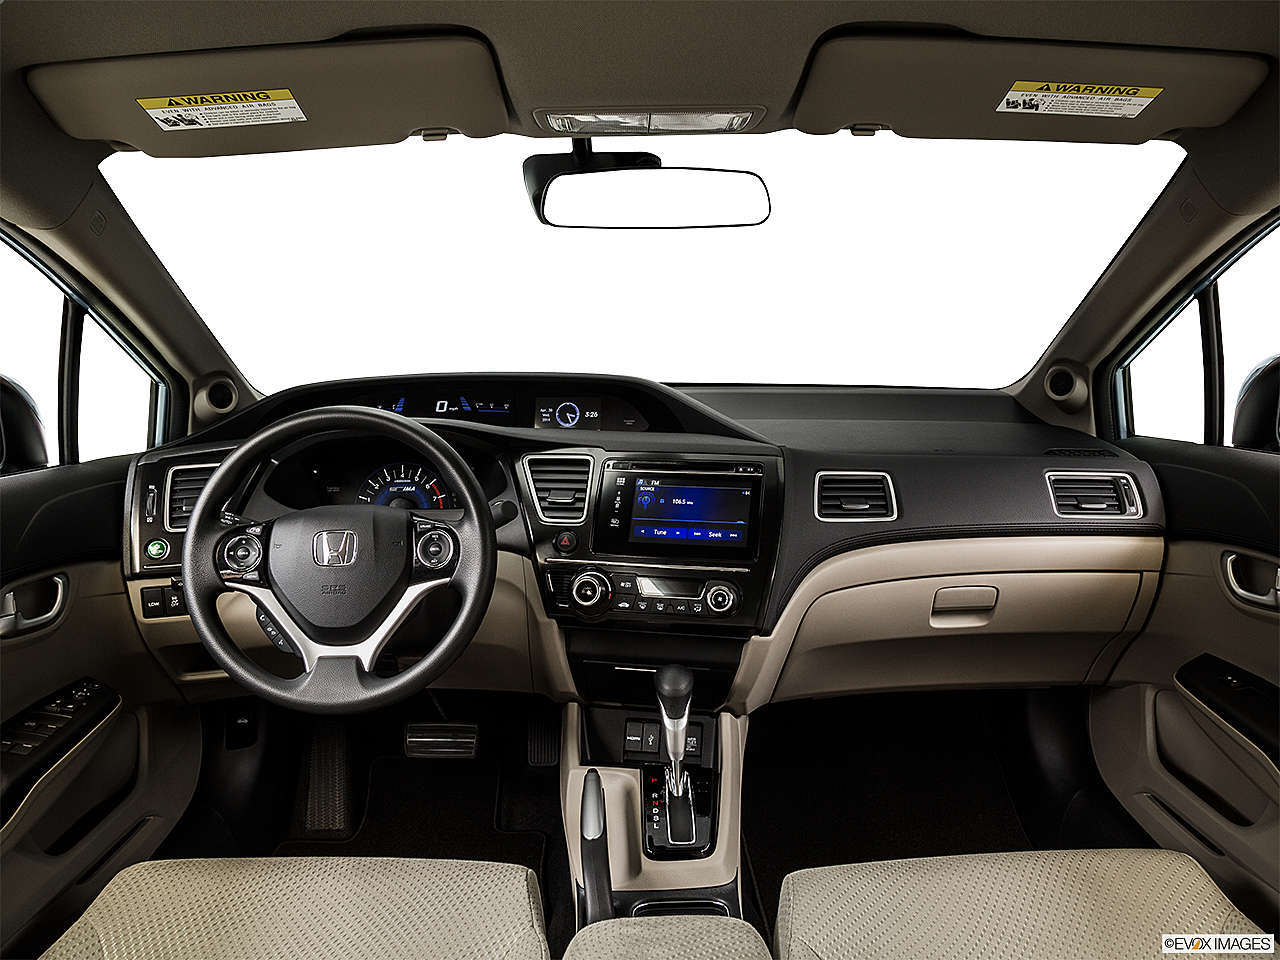 2014 Honda Civic Hybrid 4dr Sedan w/Leather - Research - GrooveCar